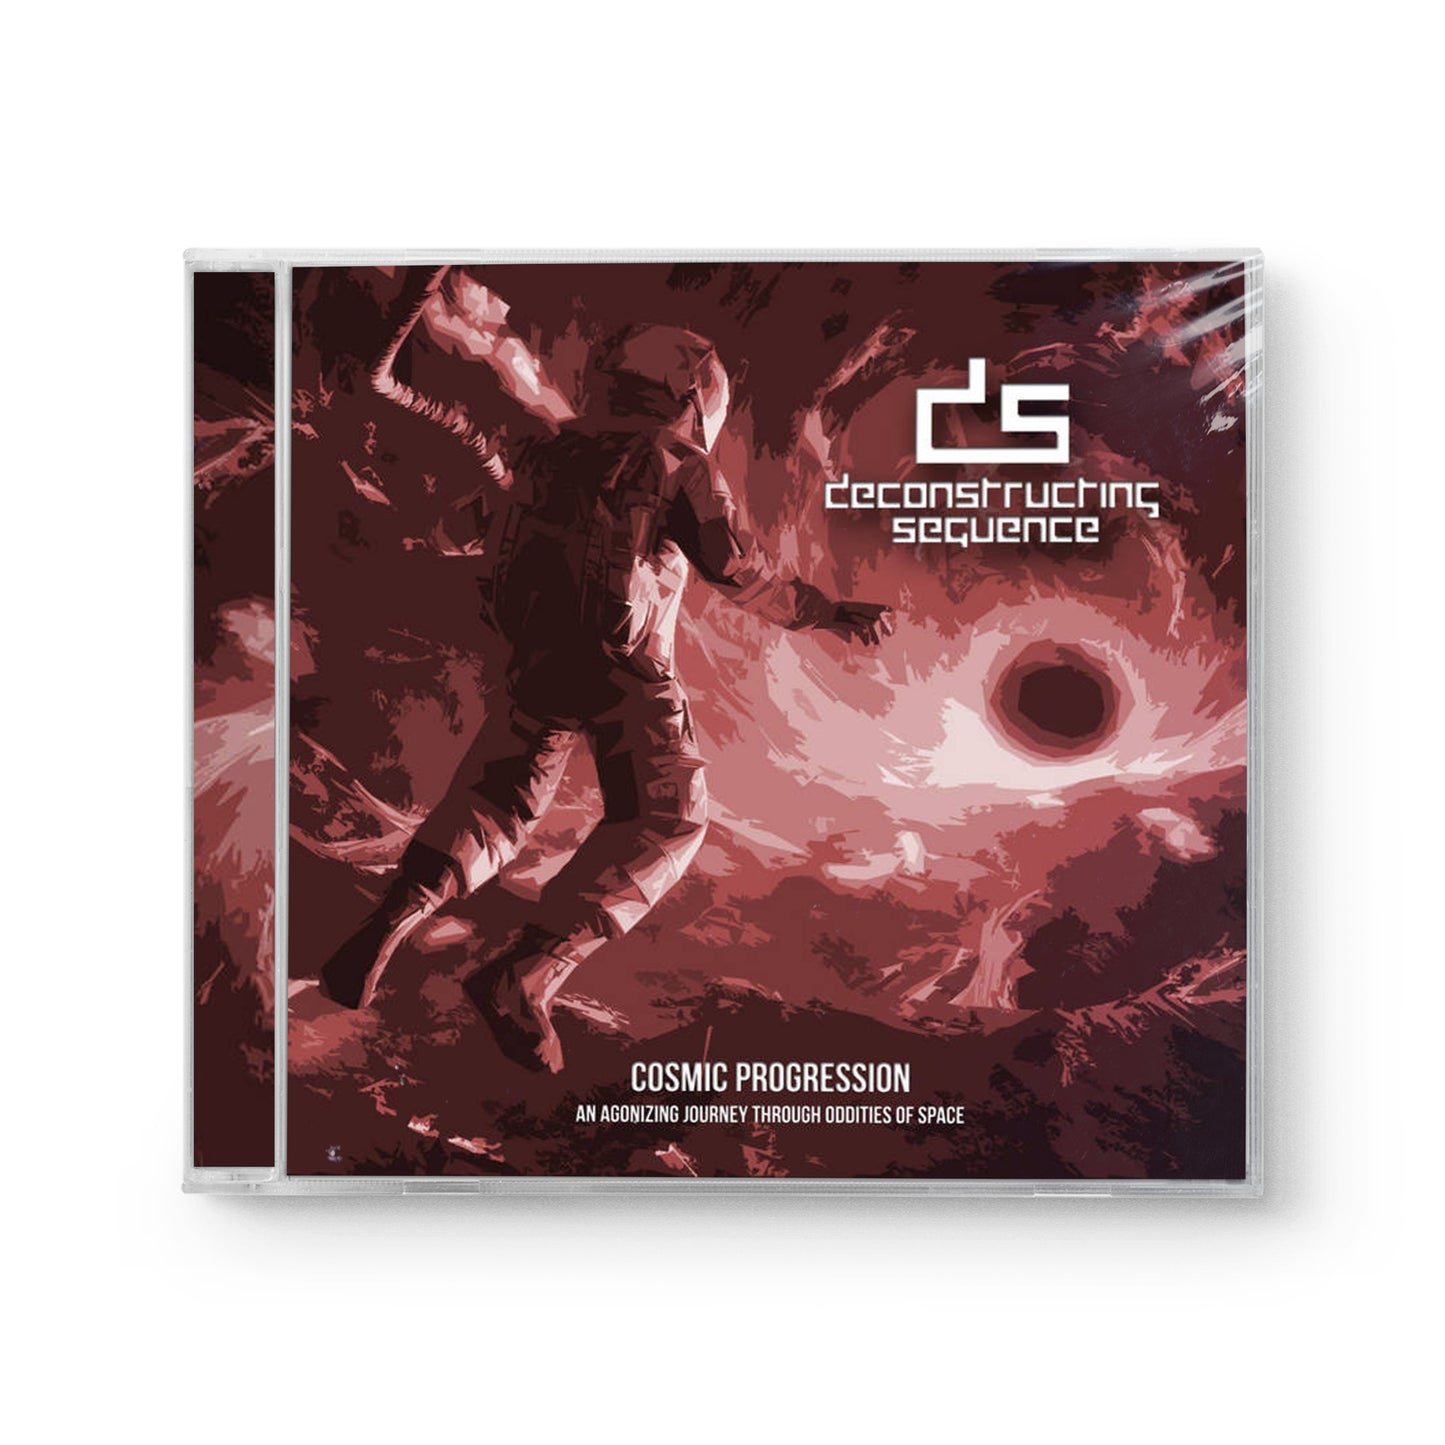 Deconstructing Sequence "Cosmic Progression" CD